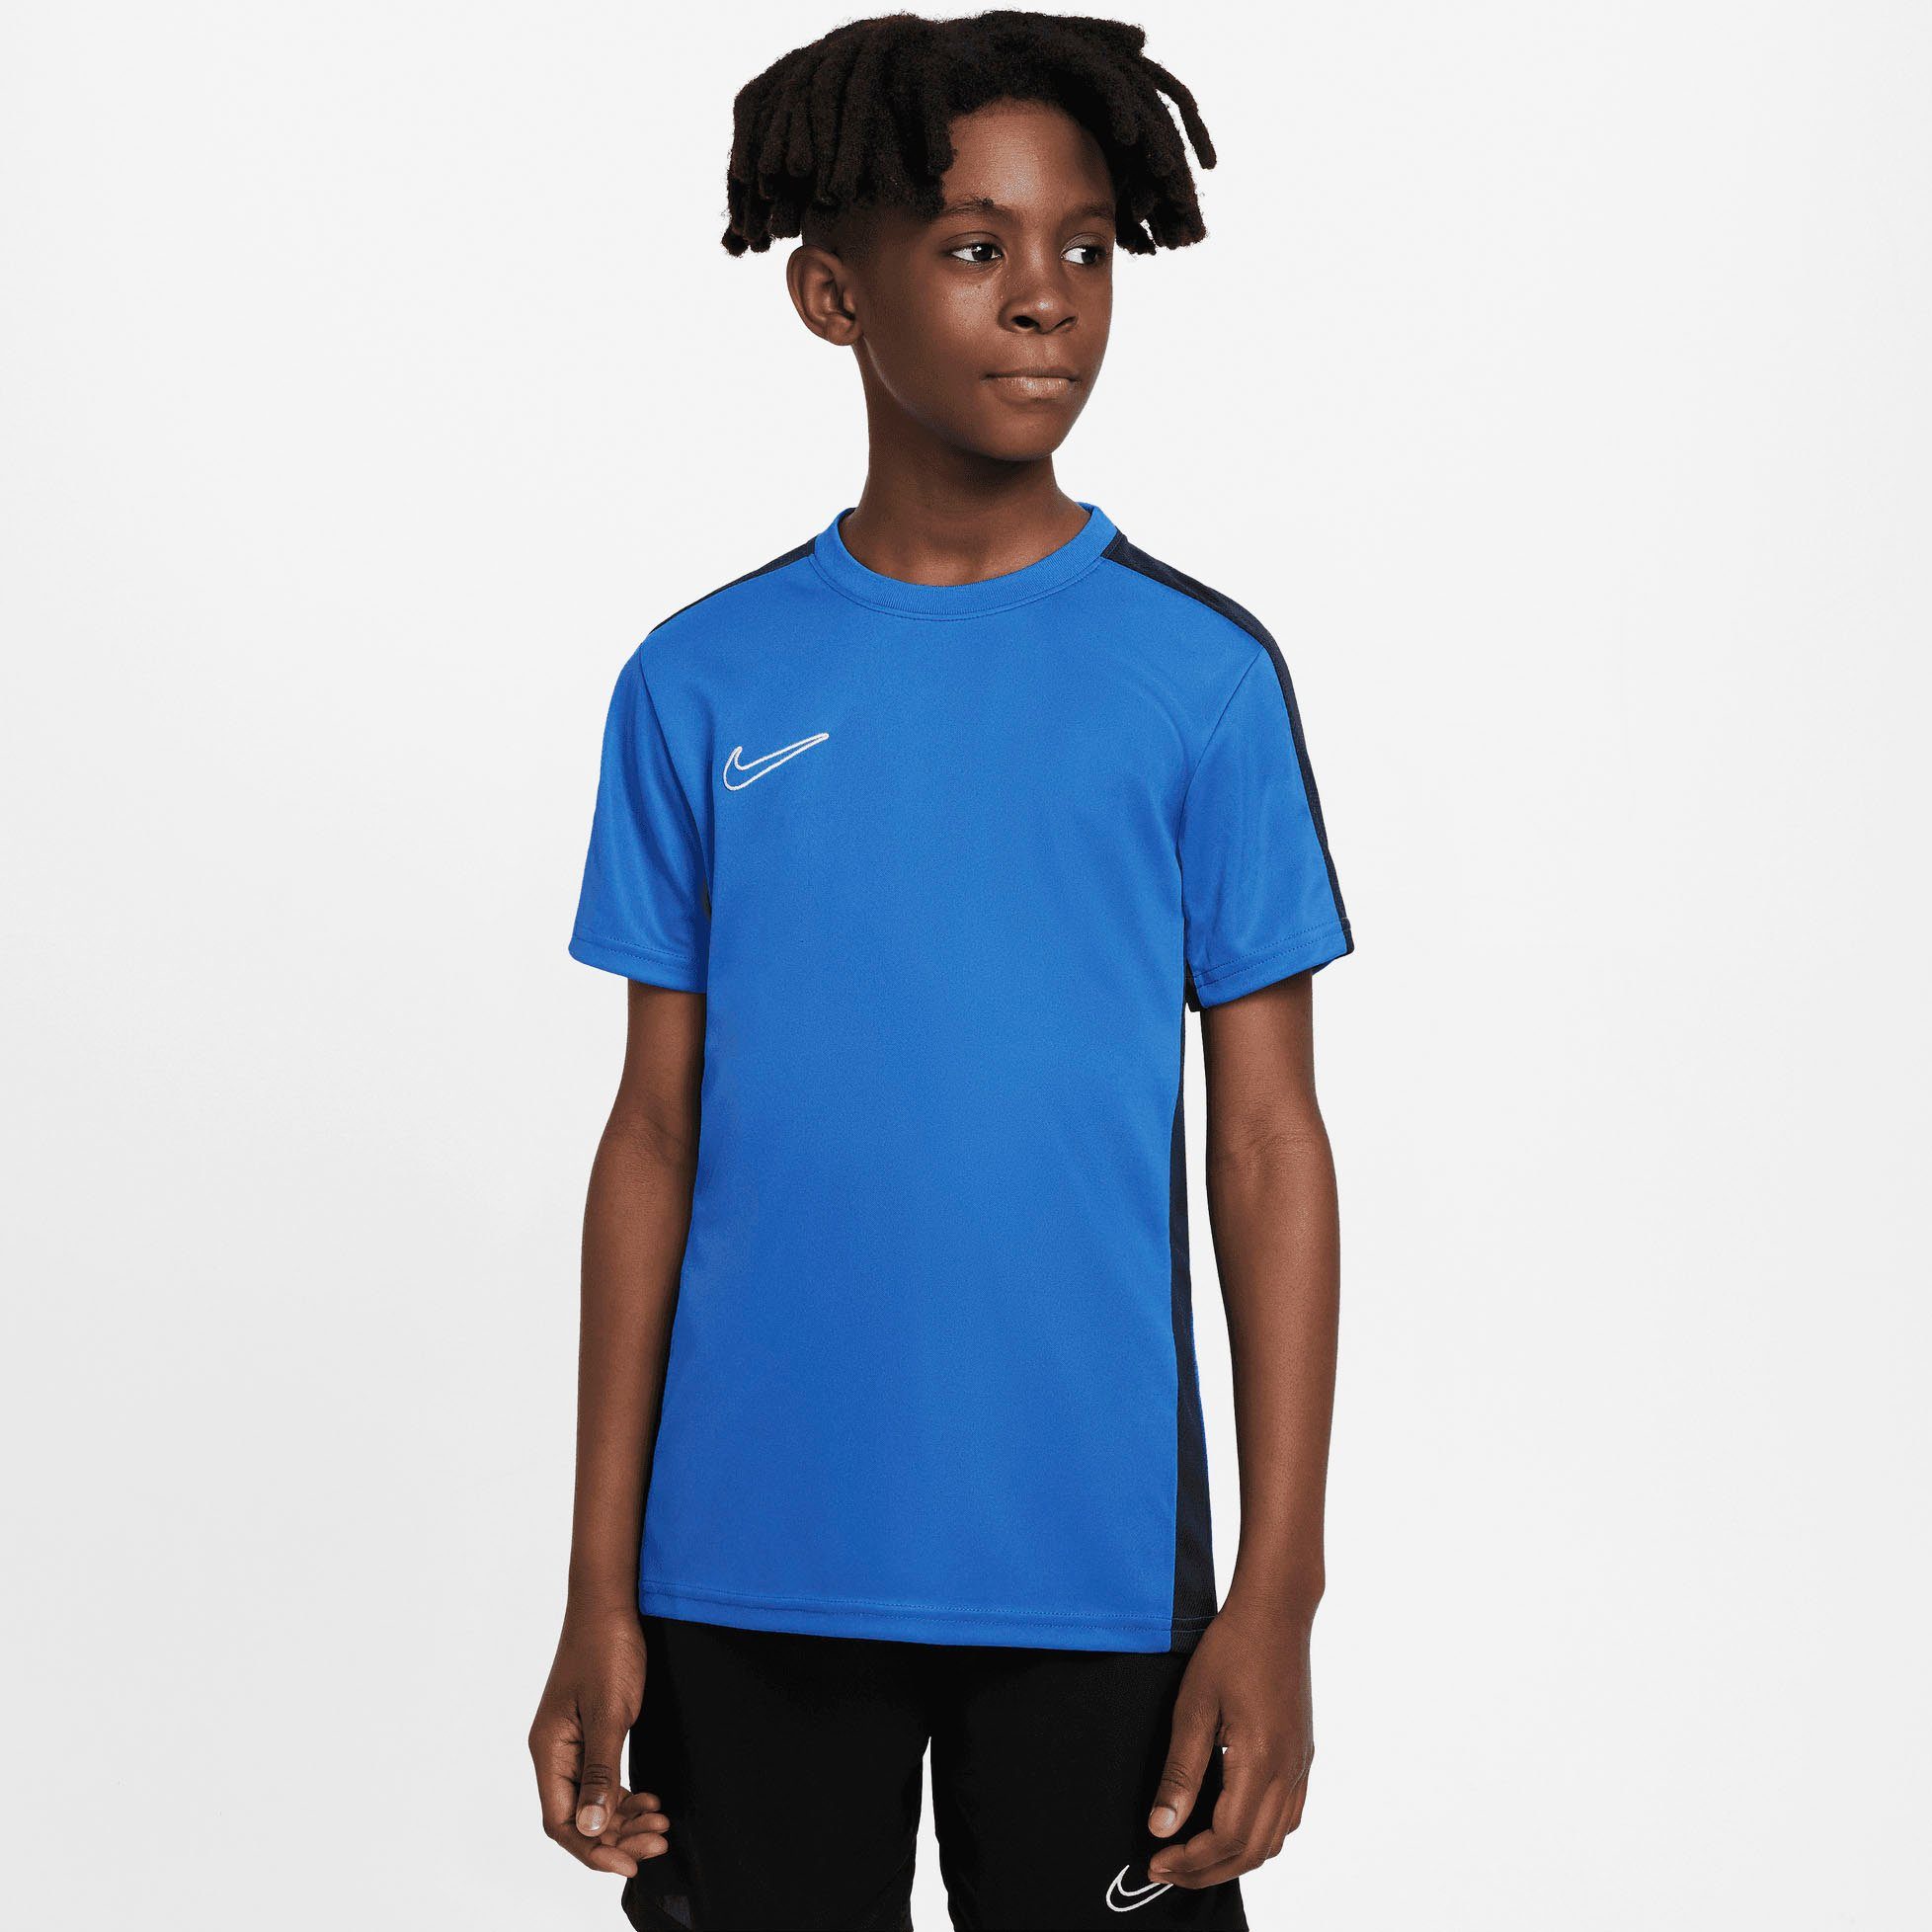 ROYAL BLUE/OBSIDIAN/WHITE TOP ACADEMY Trainingsshirt Nike KIDS' DRI-FIT